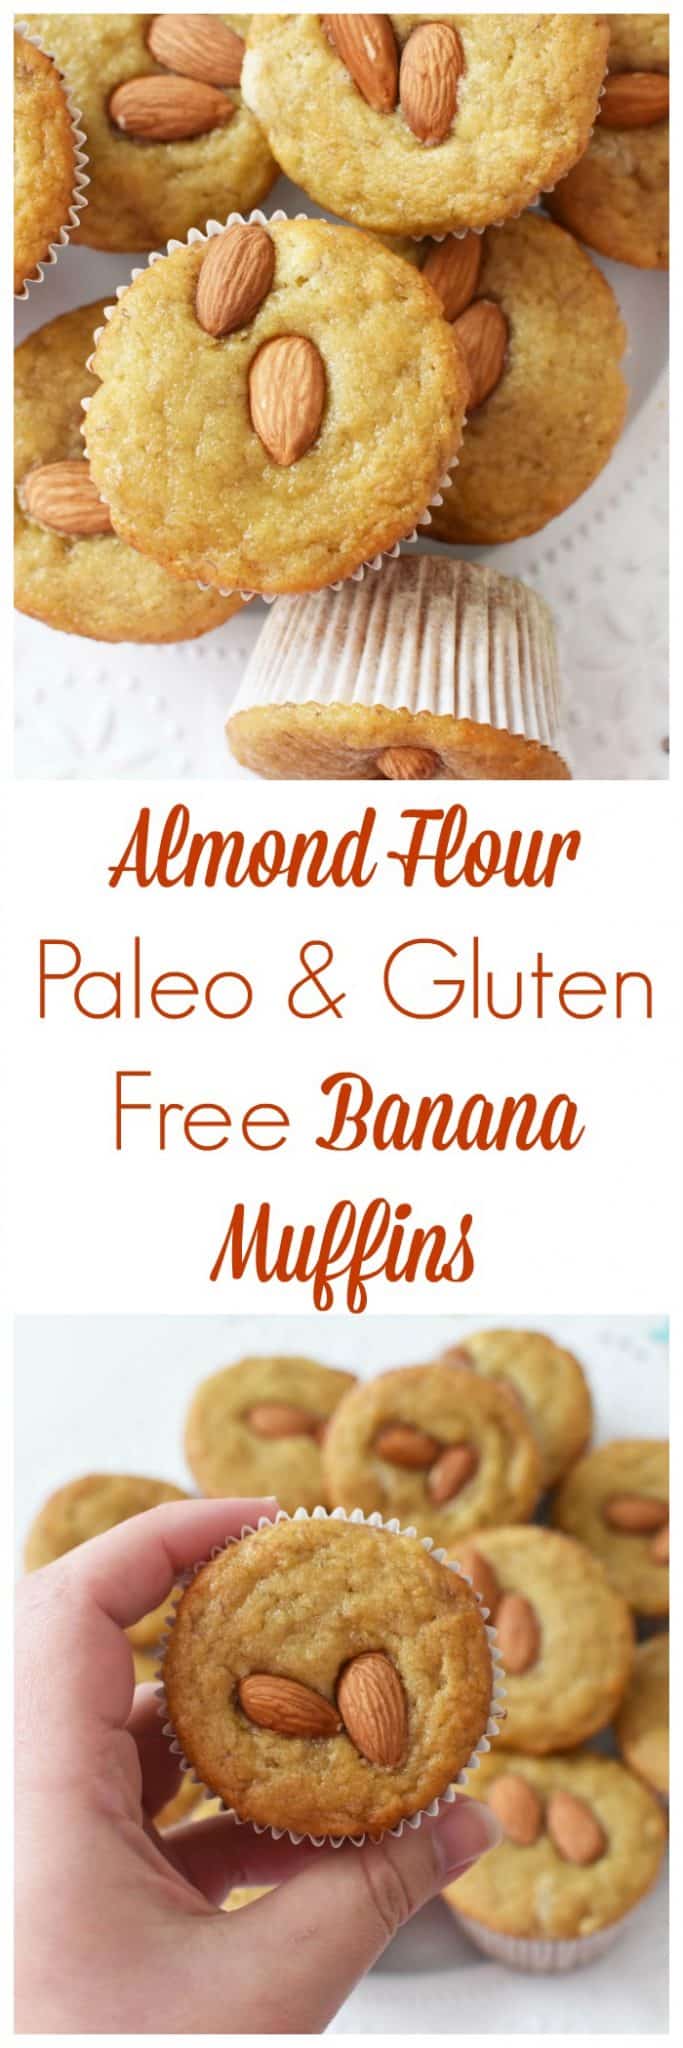 Almond Flour Banana Muffins that are Paleo & Gluten Free